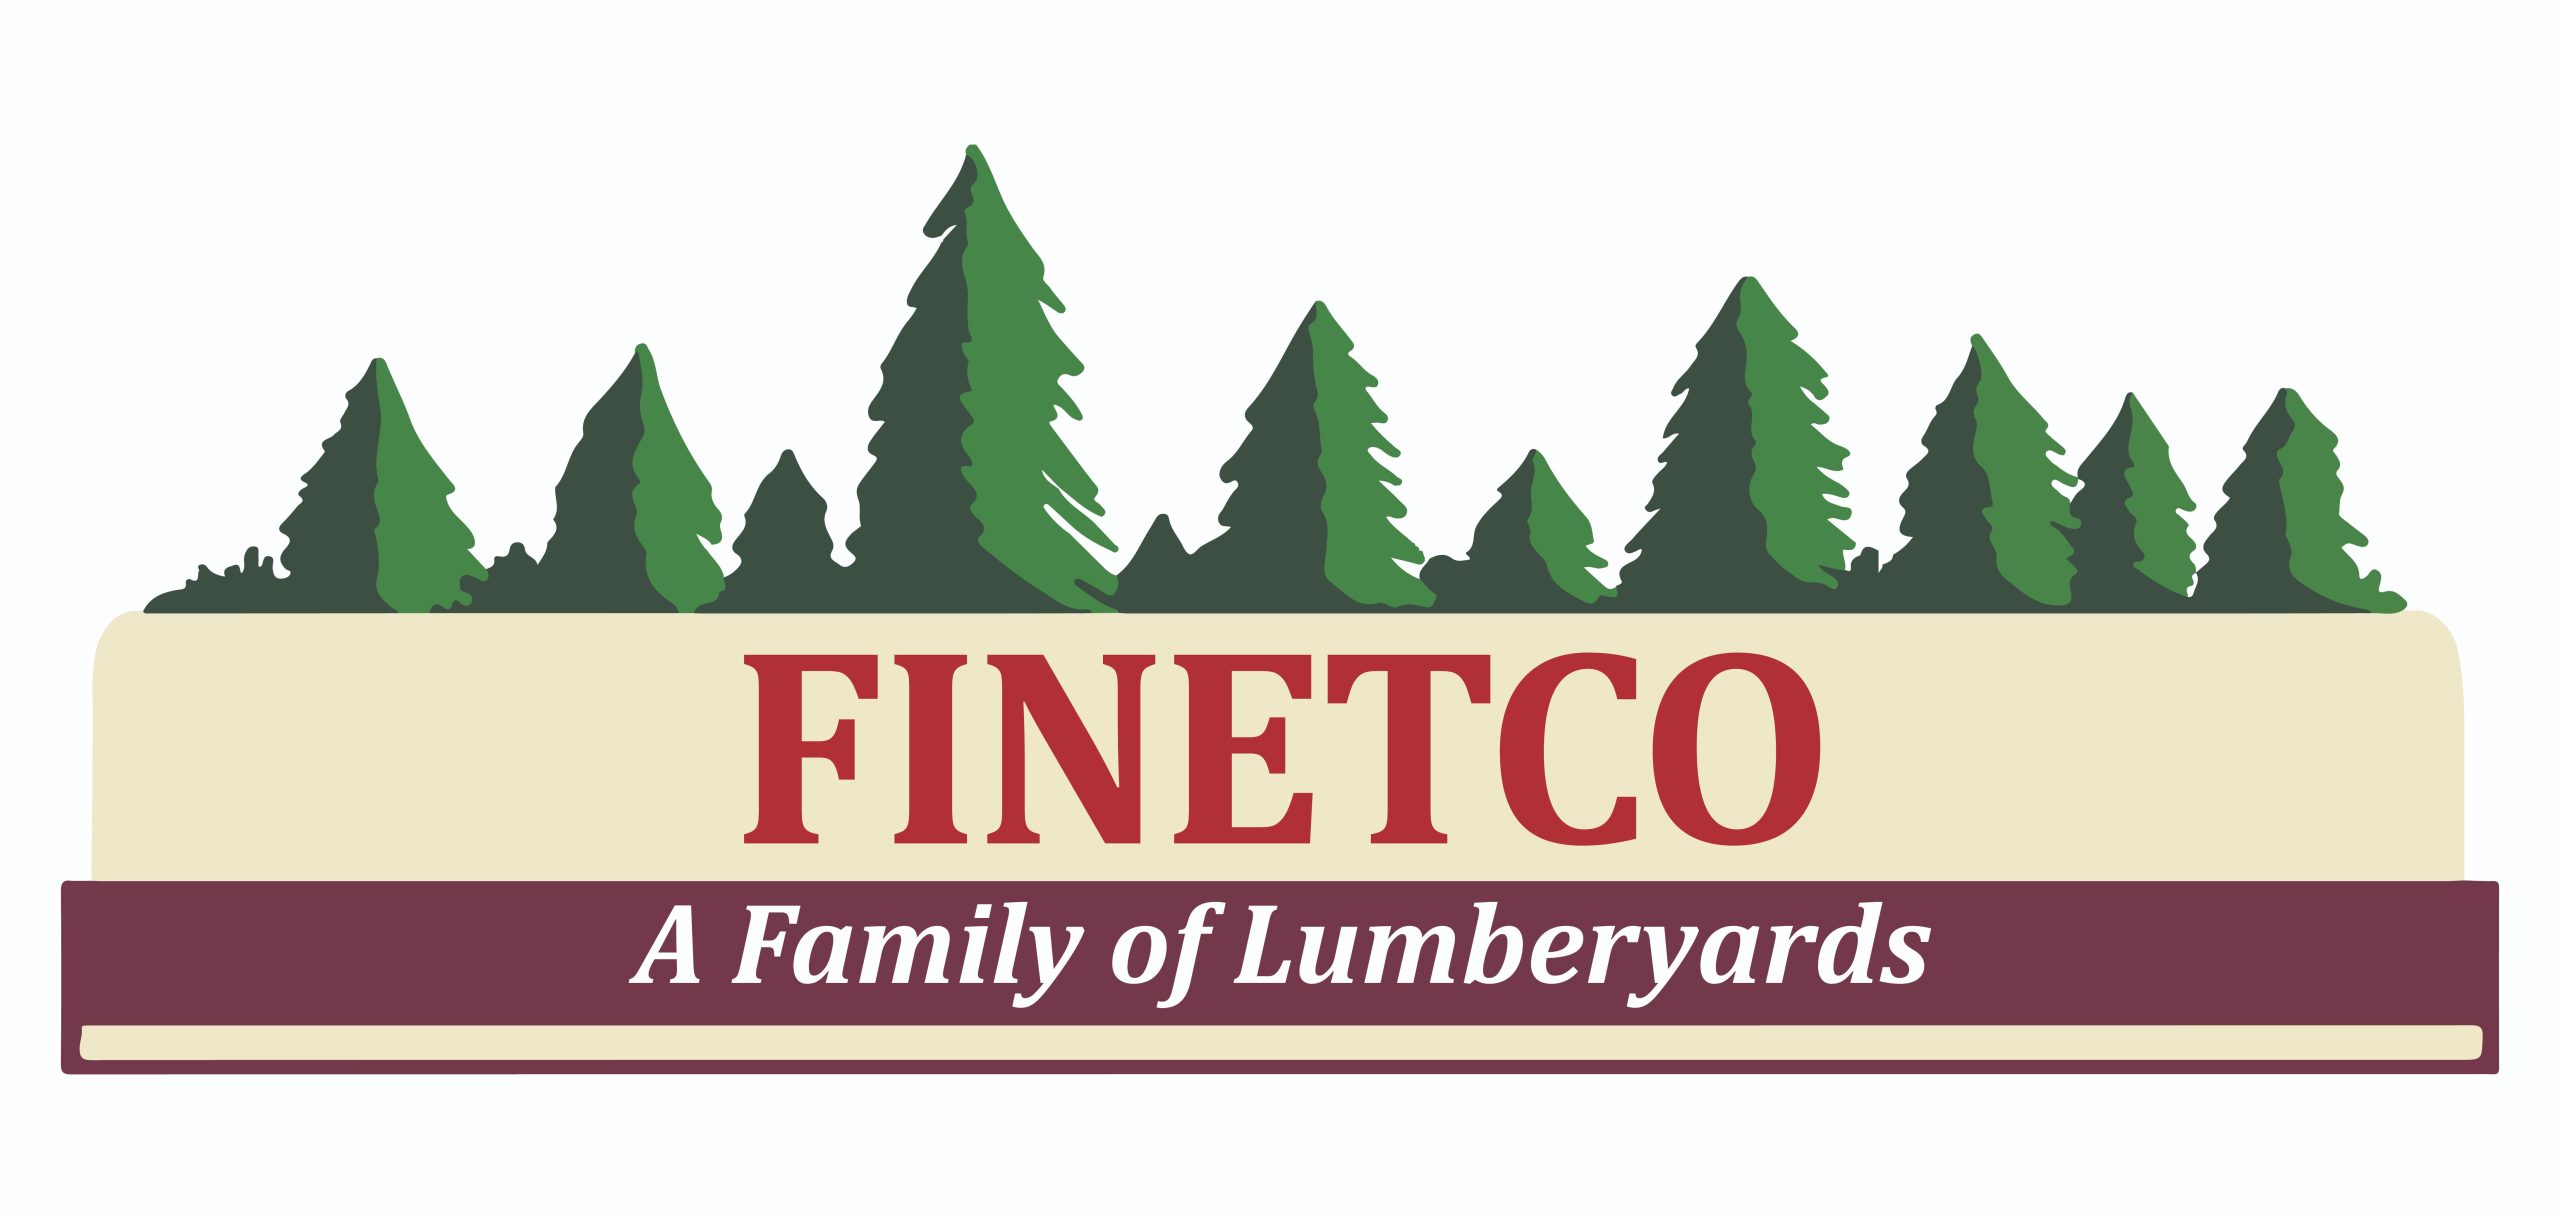 The logo of Finetco, A Family of Lumberyards